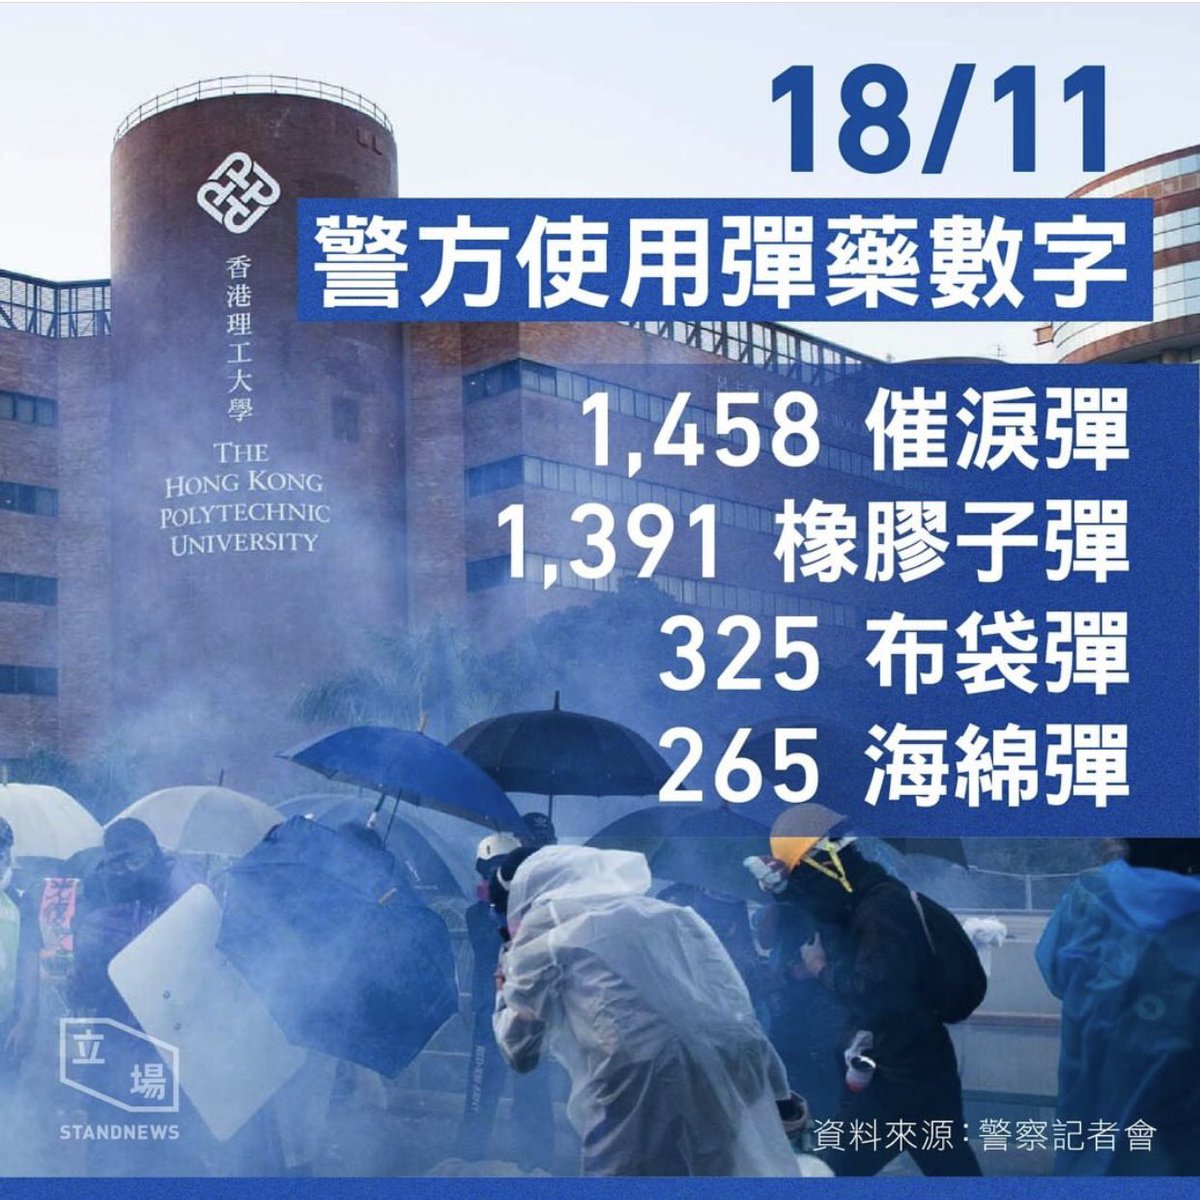 HK becomes a Tear Gas City, 1458 tear gas and 1391 rubber bullets were shoot on 18/11😢 #HongKongProtests #HumanitarianCrisis #HKPoliceTerrorism #HKPoliceBrutality #TiananmenSquareMassacre #StandwithHonKong #PrayForHongKong  #FiveDemandsNotOneLess #HKHumanRightsandDemocracyAct